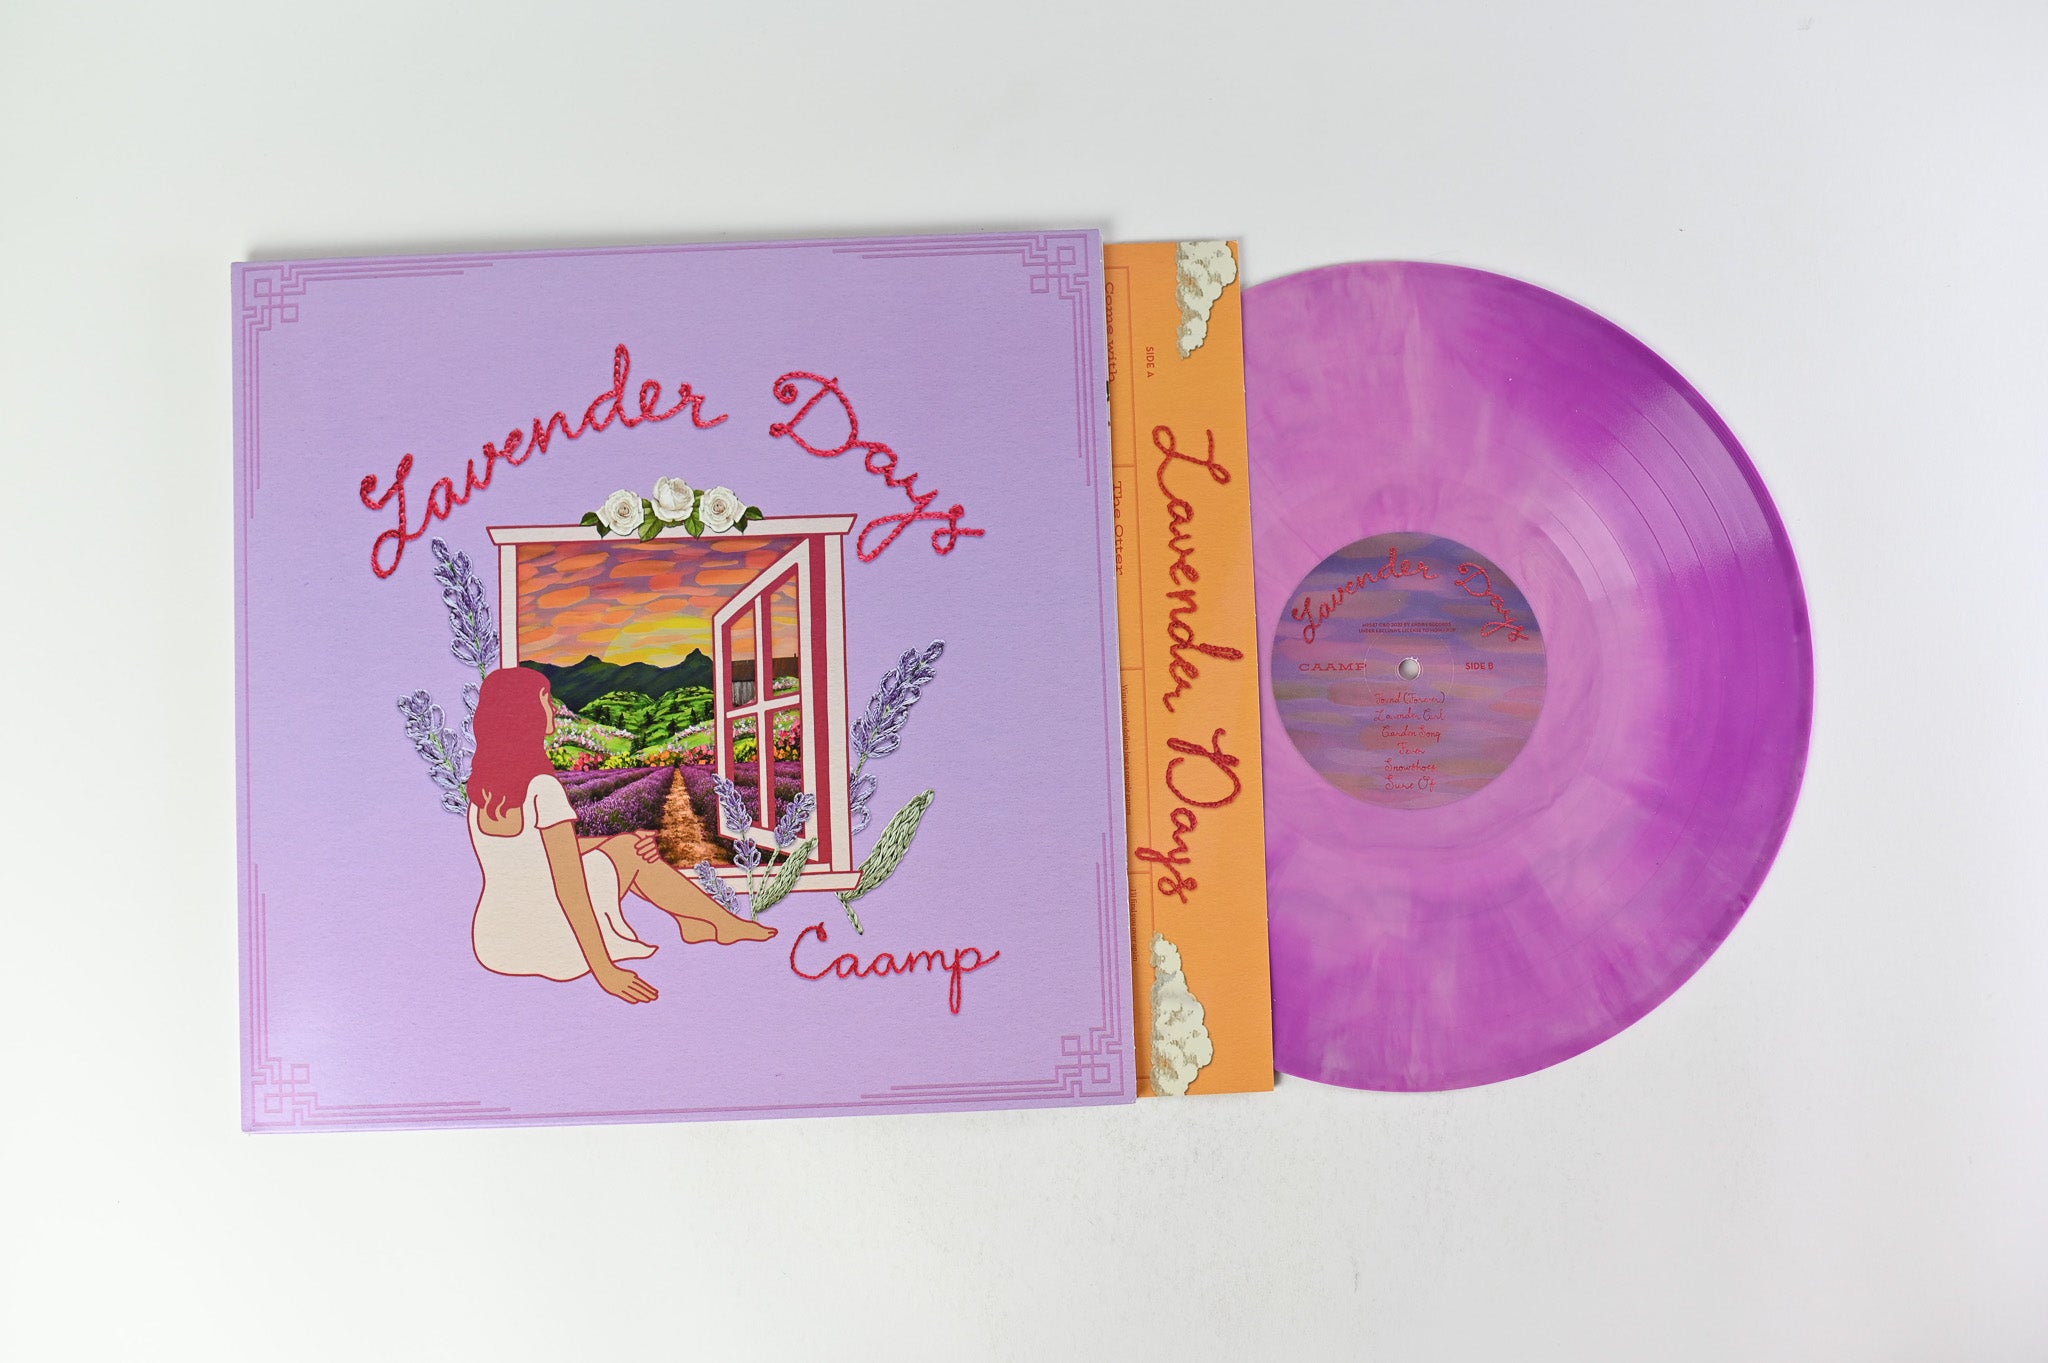 Caamp - Lavender Days on Mom + Pop - Pink and Purple Galaxy Swirl